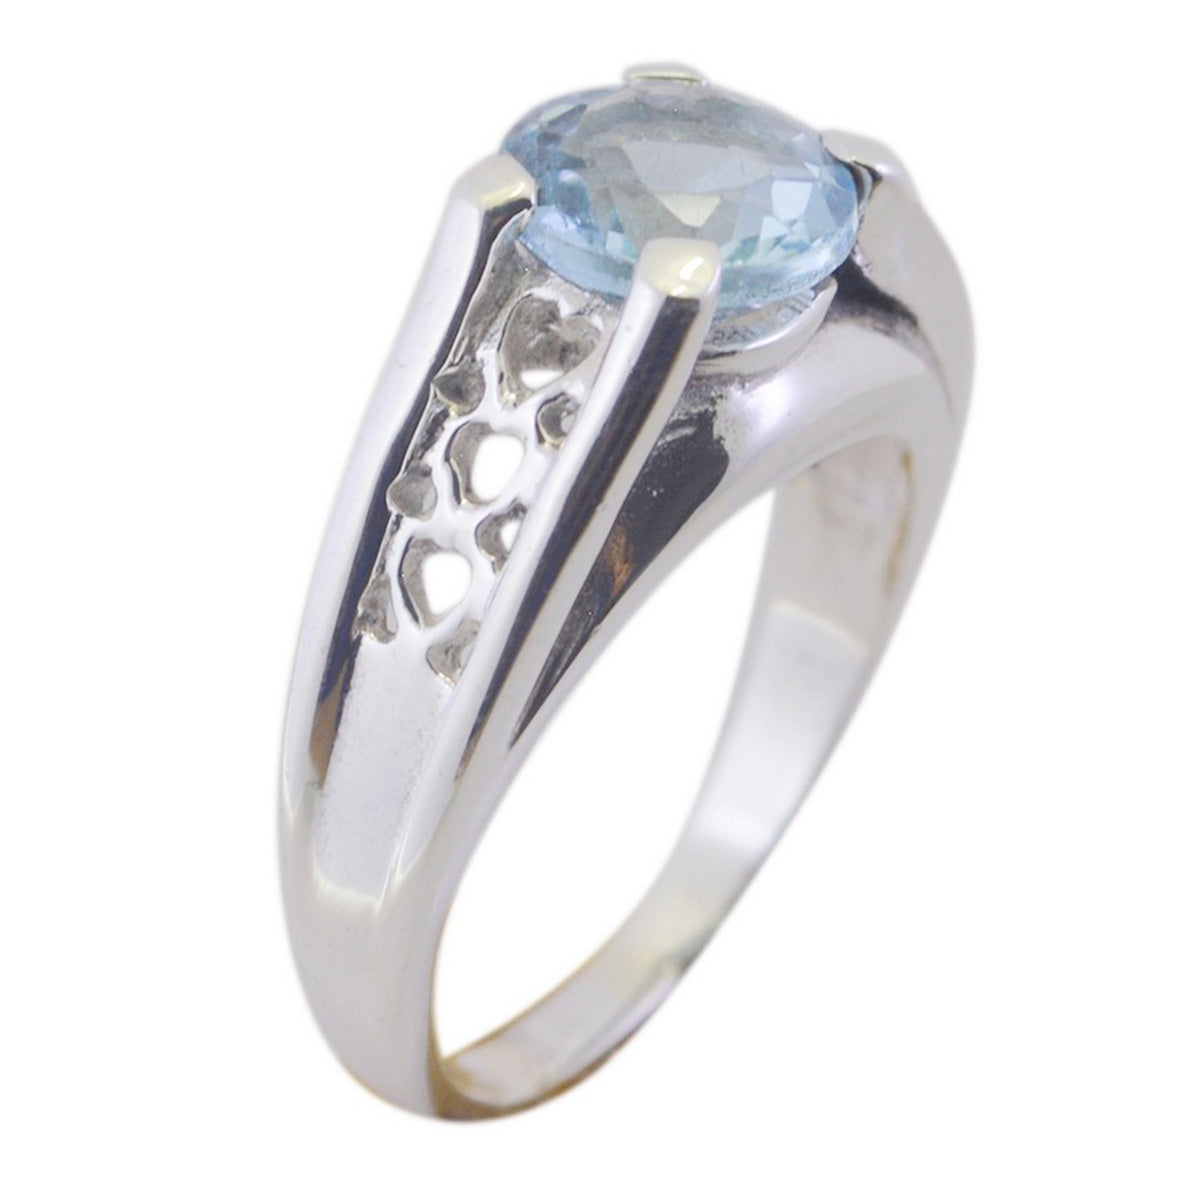 Riyo Captivating Stone Blue Topaz Sterling Silver Ring Now Trending